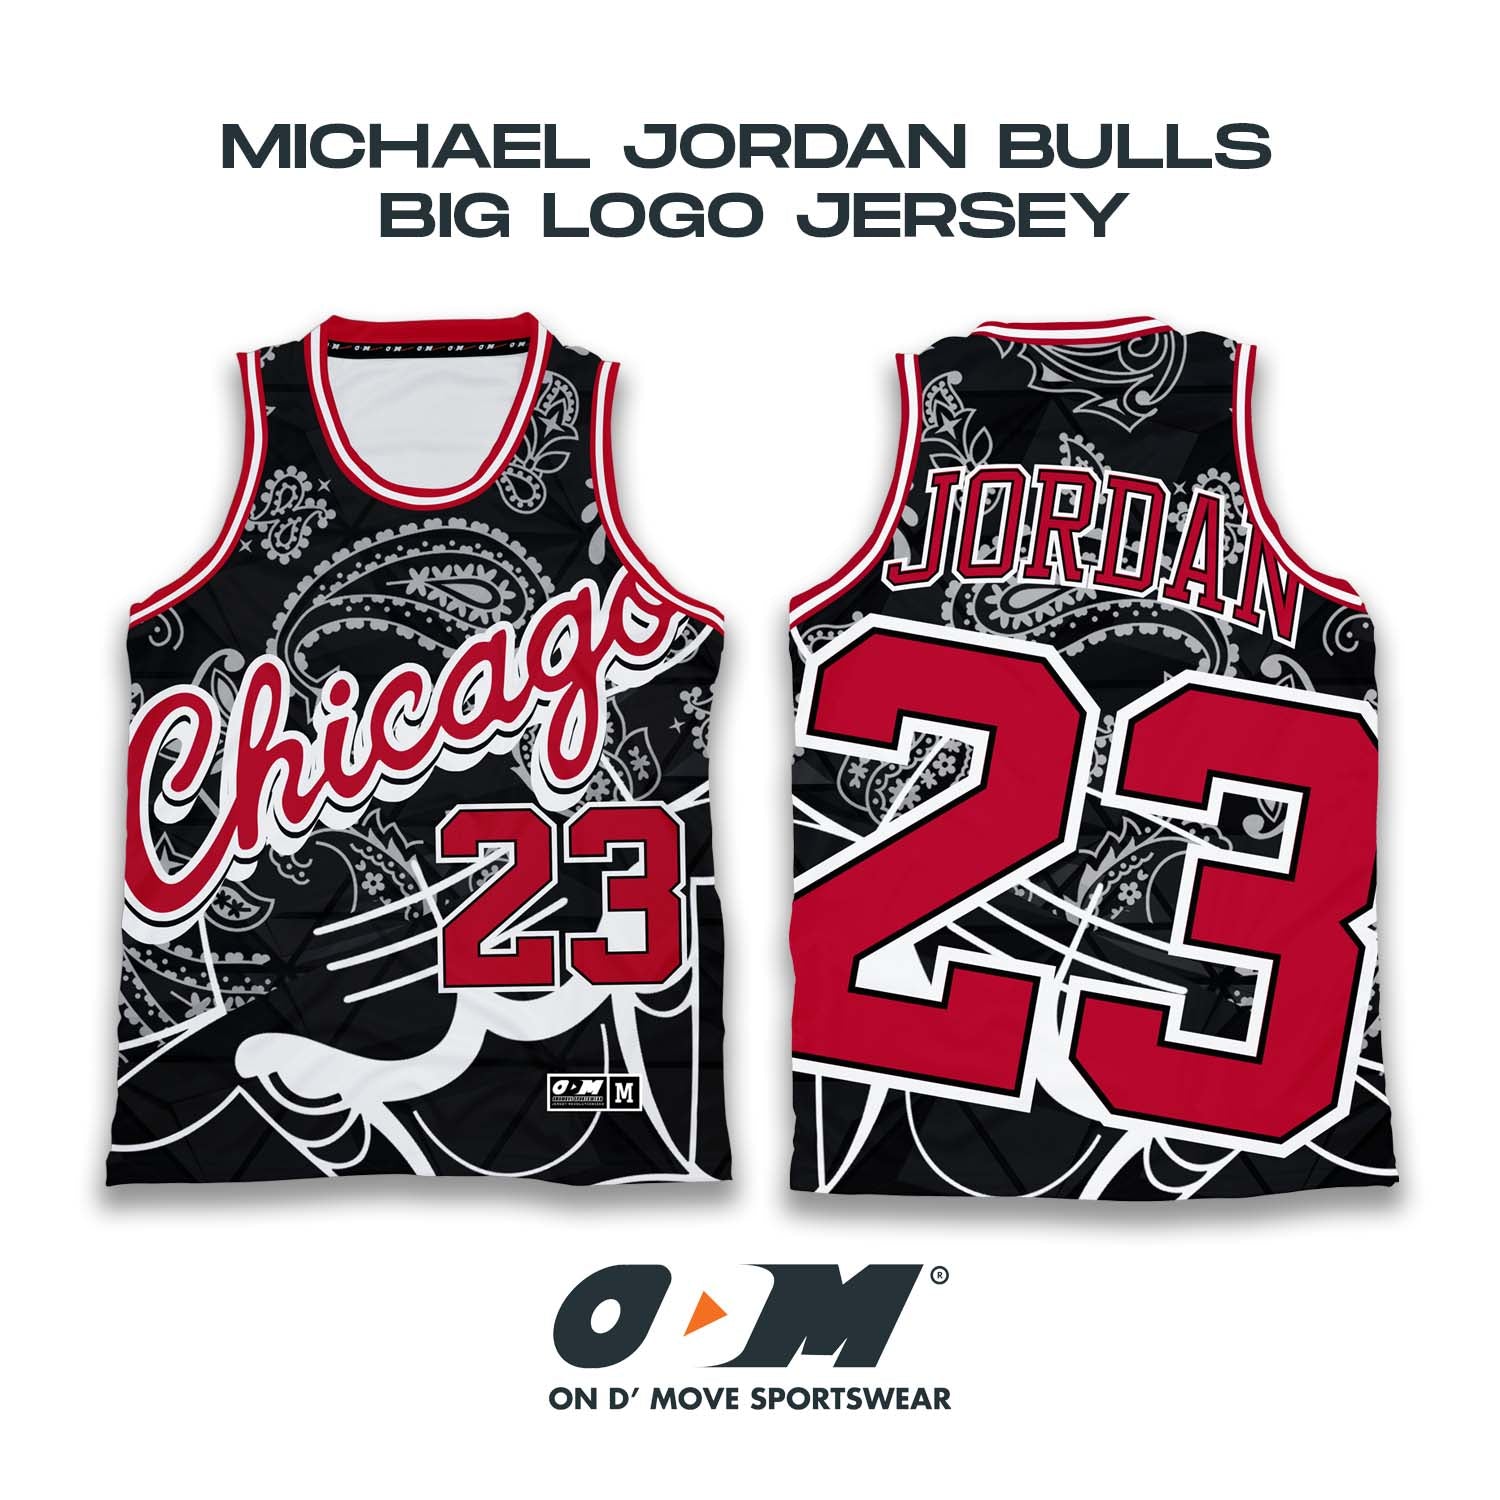 Michael Jordan Bulls Big Logo Jersey